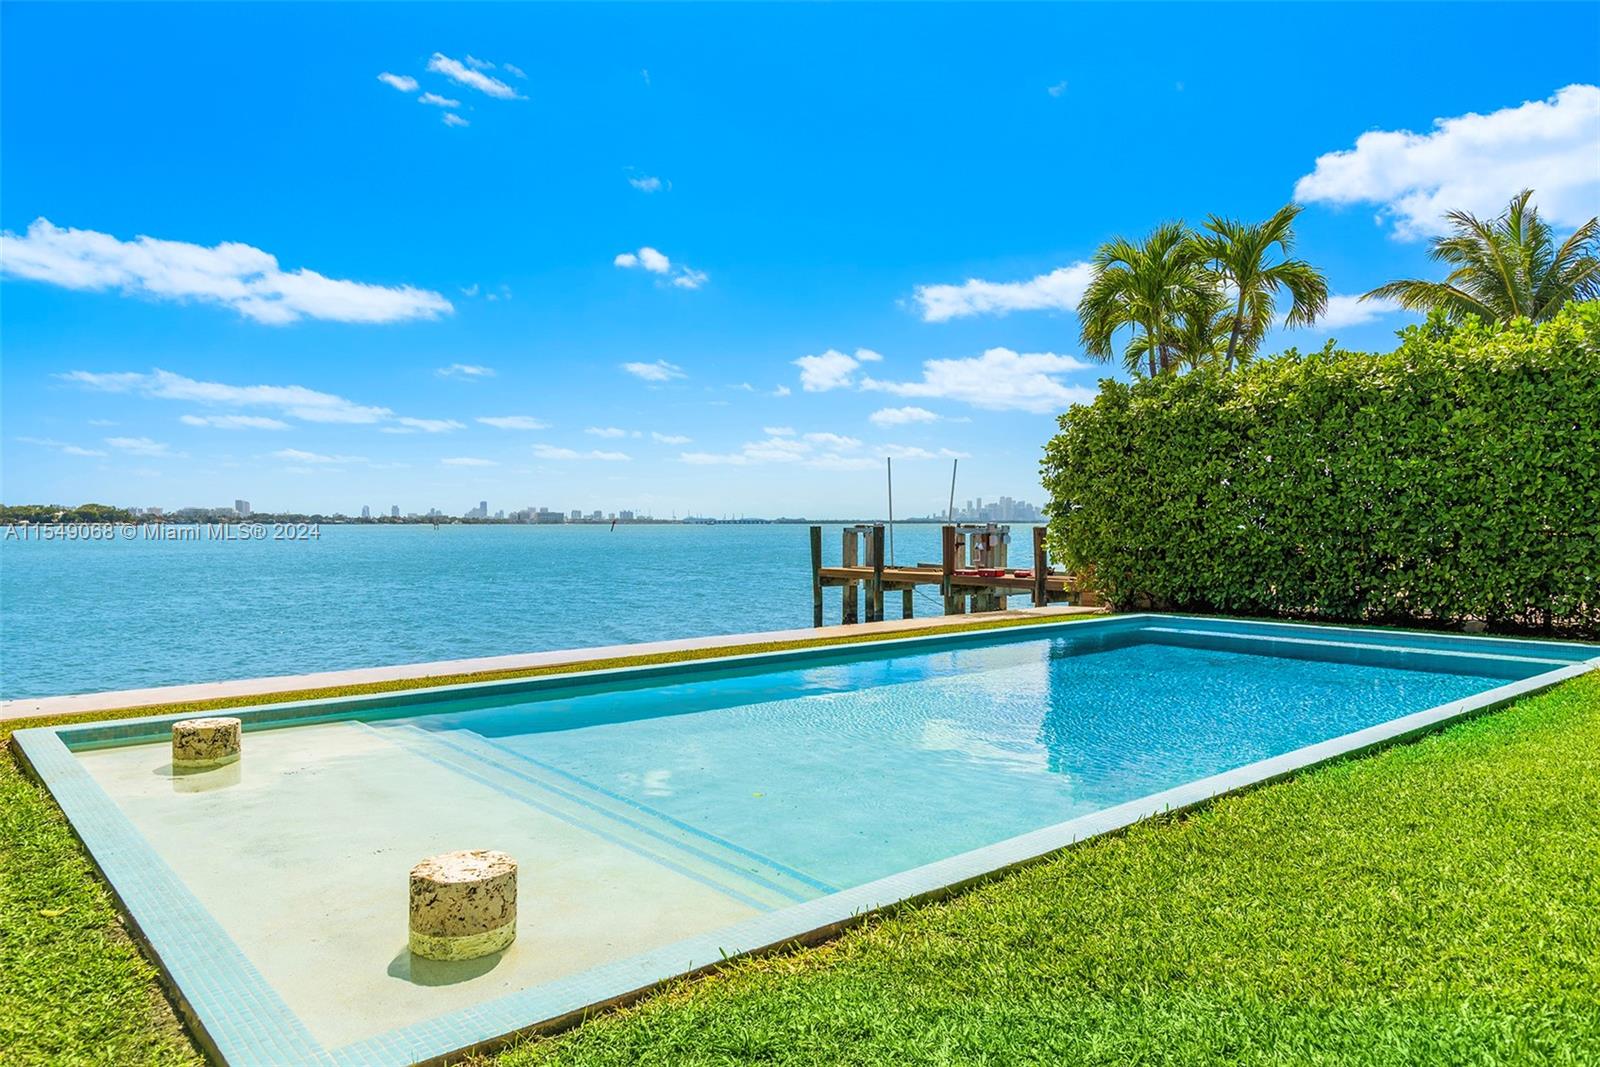 Property for Sale at 1660 Bay Dr, Miami Beach, Miami-Dade County, Florida - Bedrooms: 4 
Bathrooms: 4  - $4,500,000